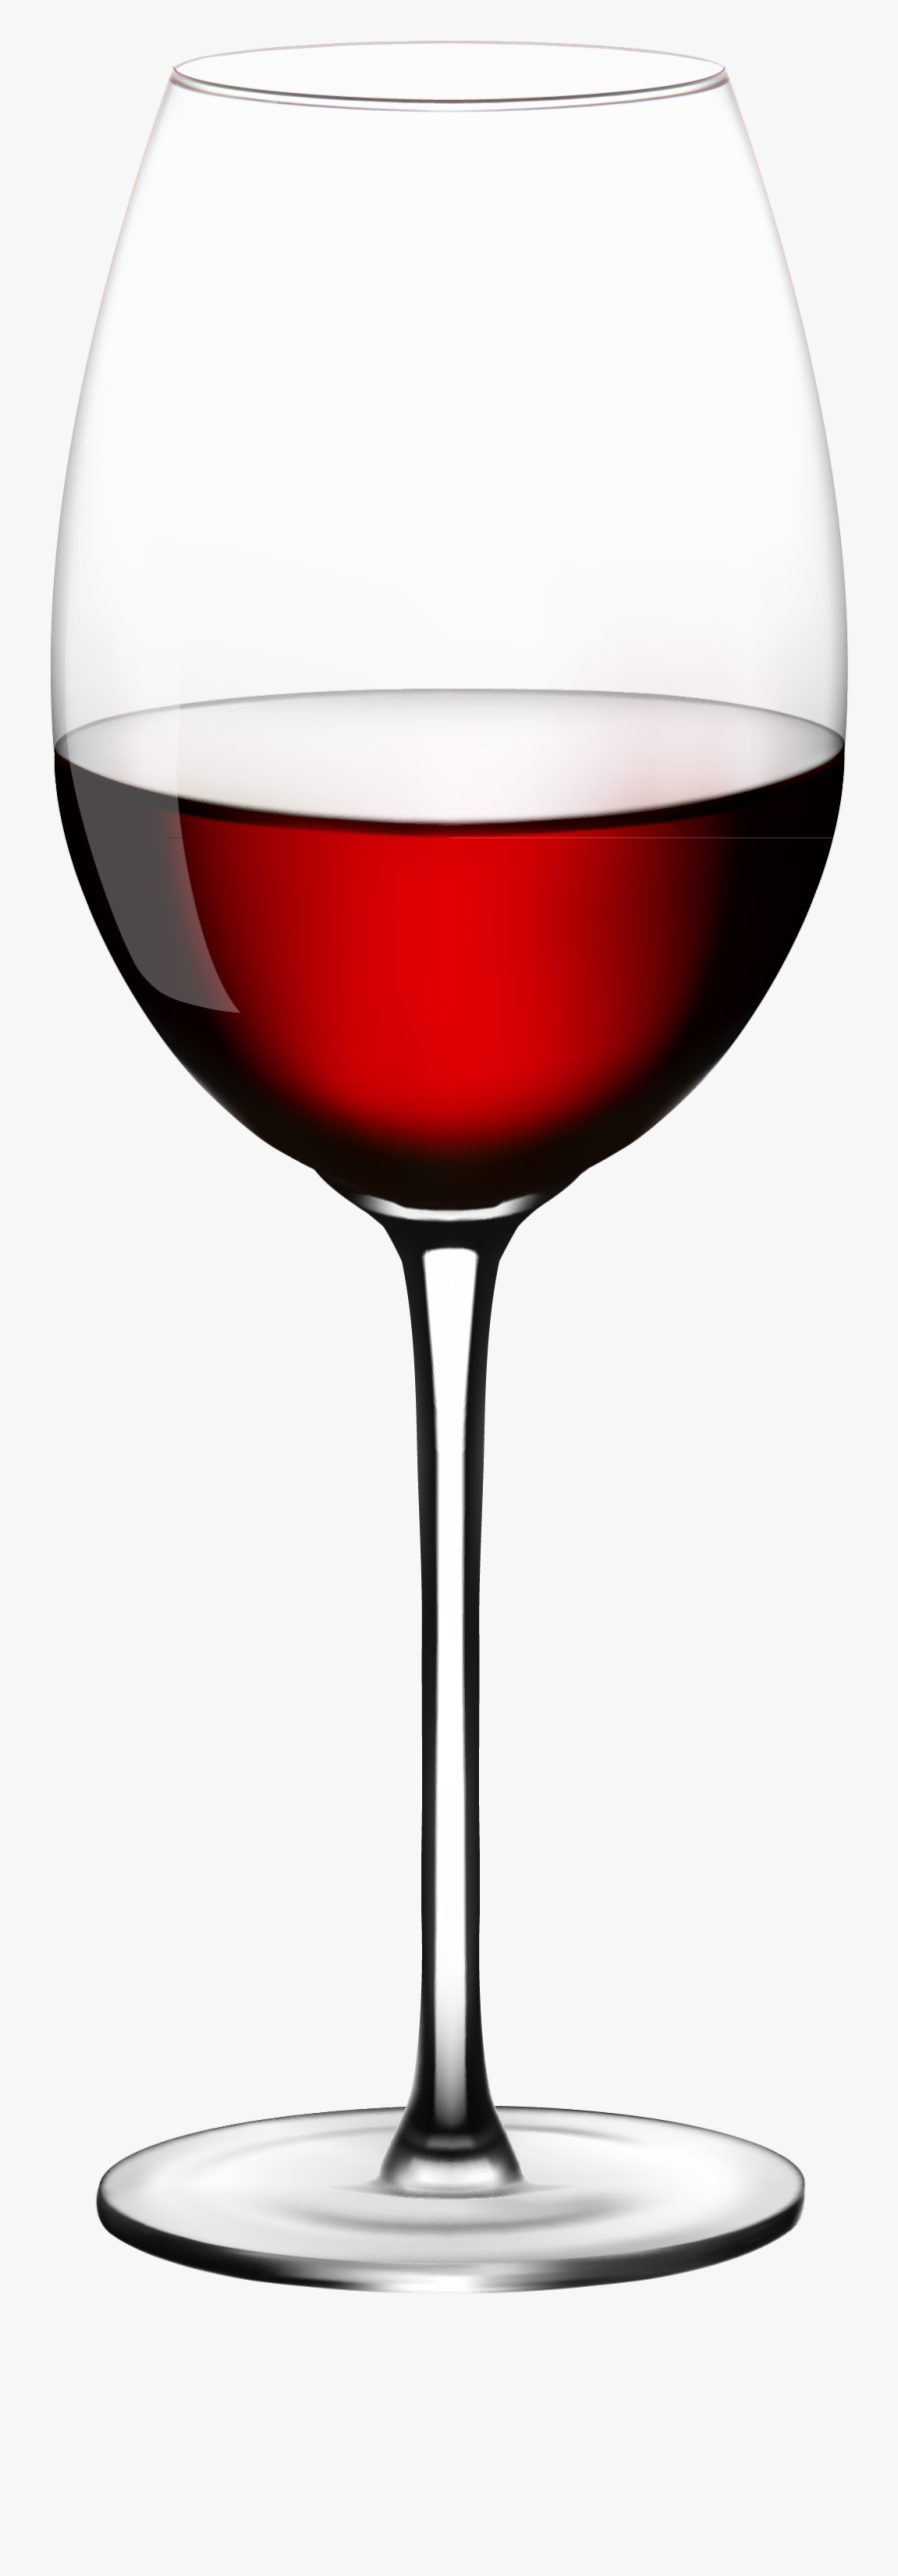 Wine Glasses Clipart Transparent Background - Transparent Wine Glass Png, Transparent Clipart